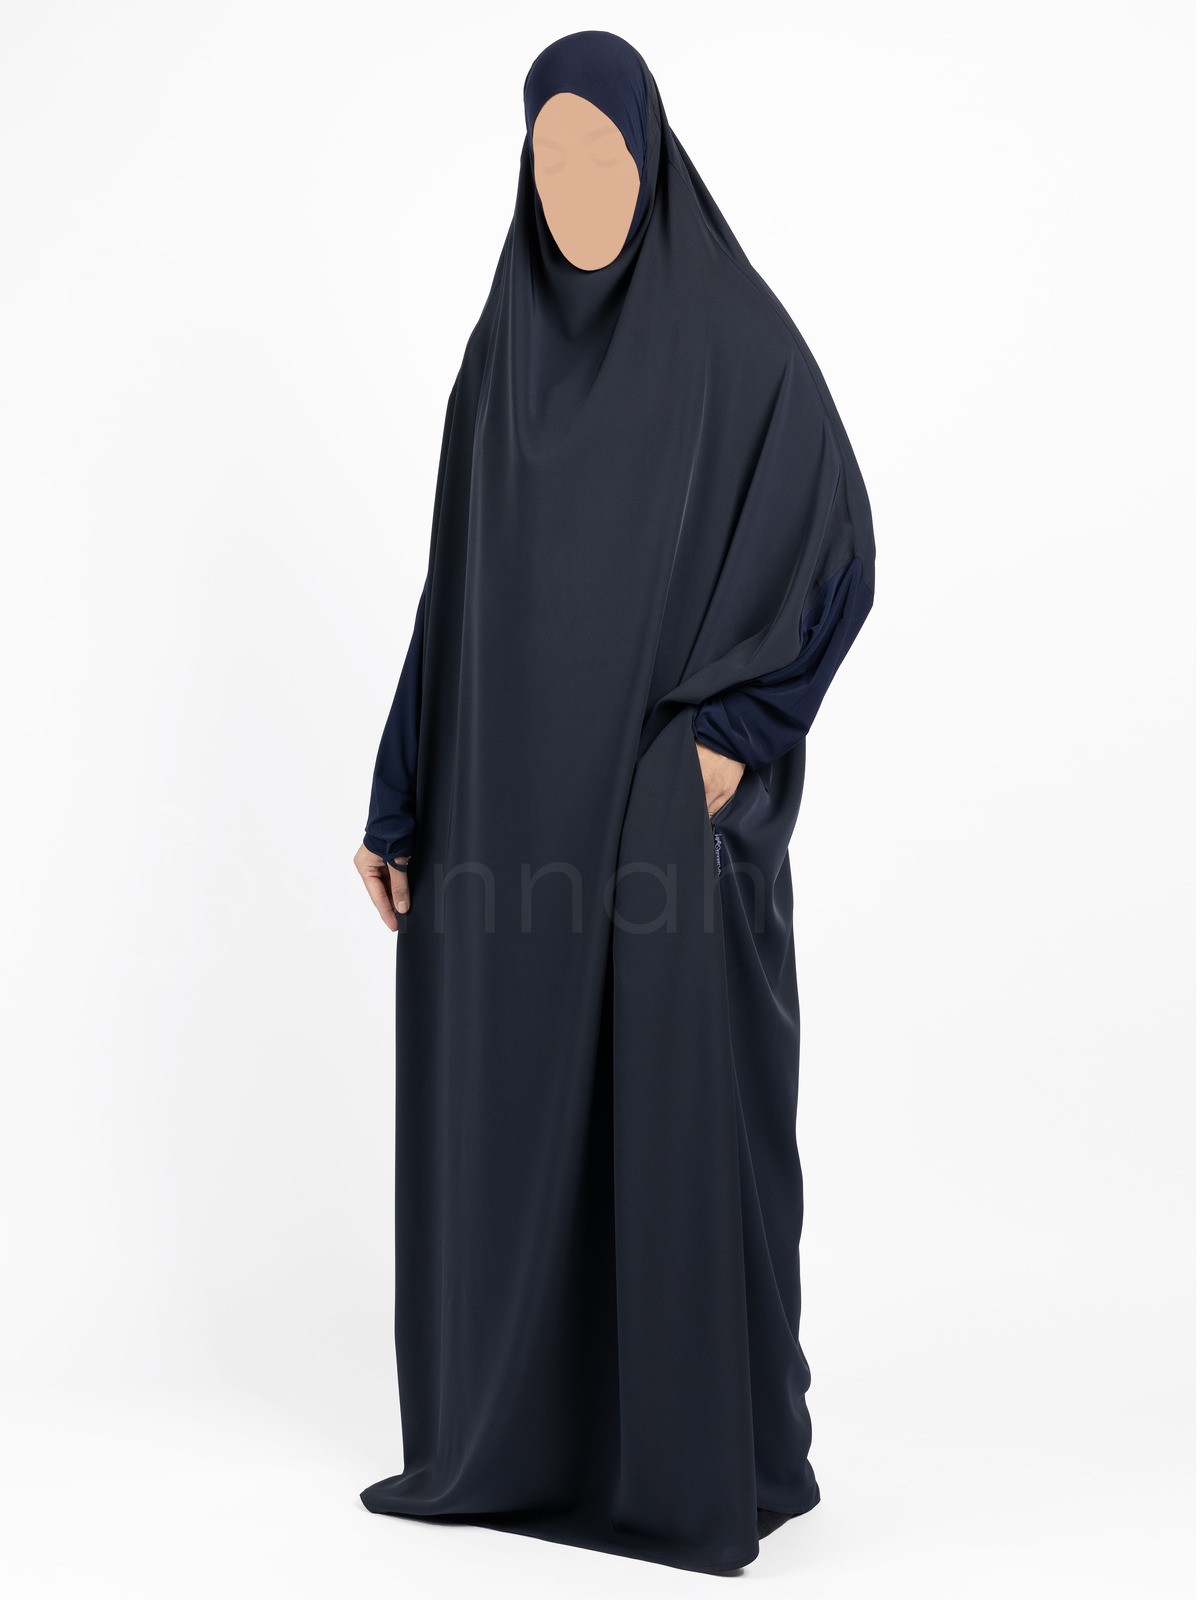 Sunnah Style - Signature Full Length Jilbab (Navy Blue)